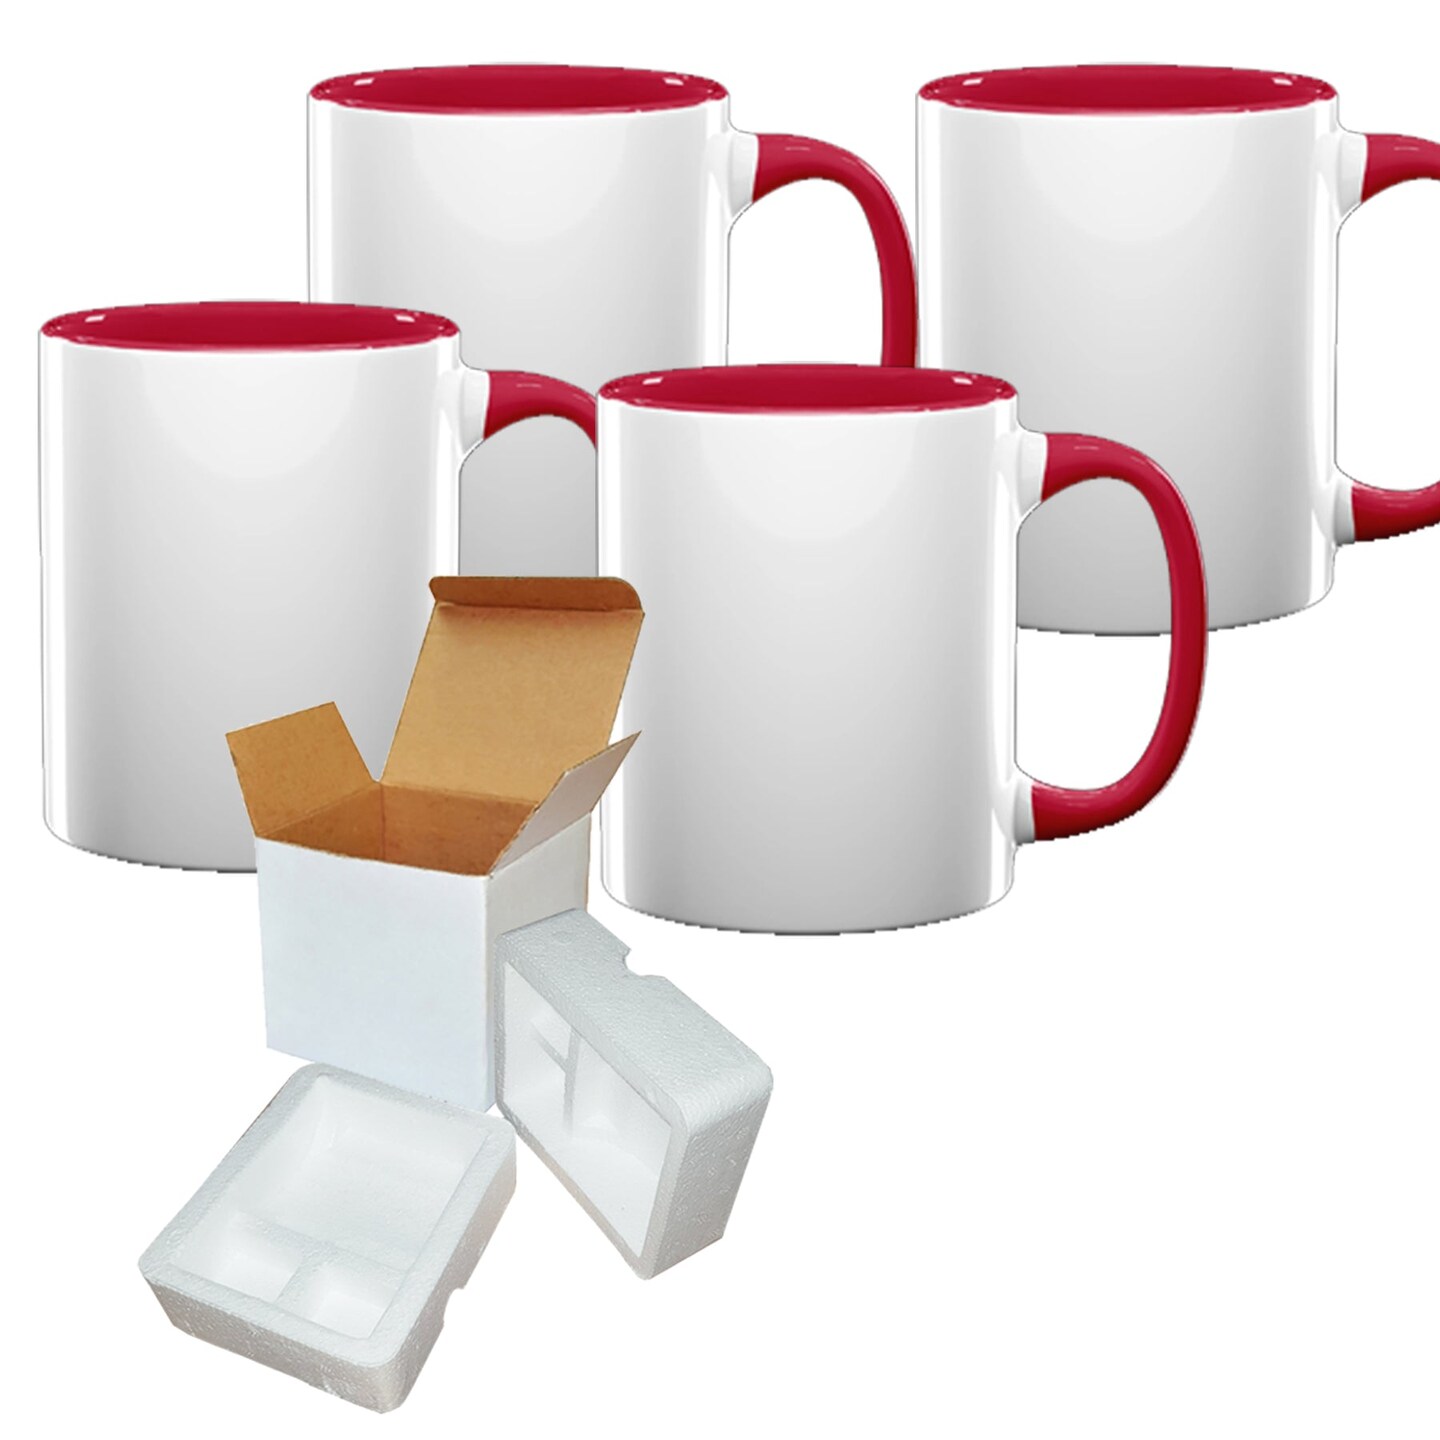 Sublimation Mug 11oz Red - Inside and Handle | SPM.082.096.020